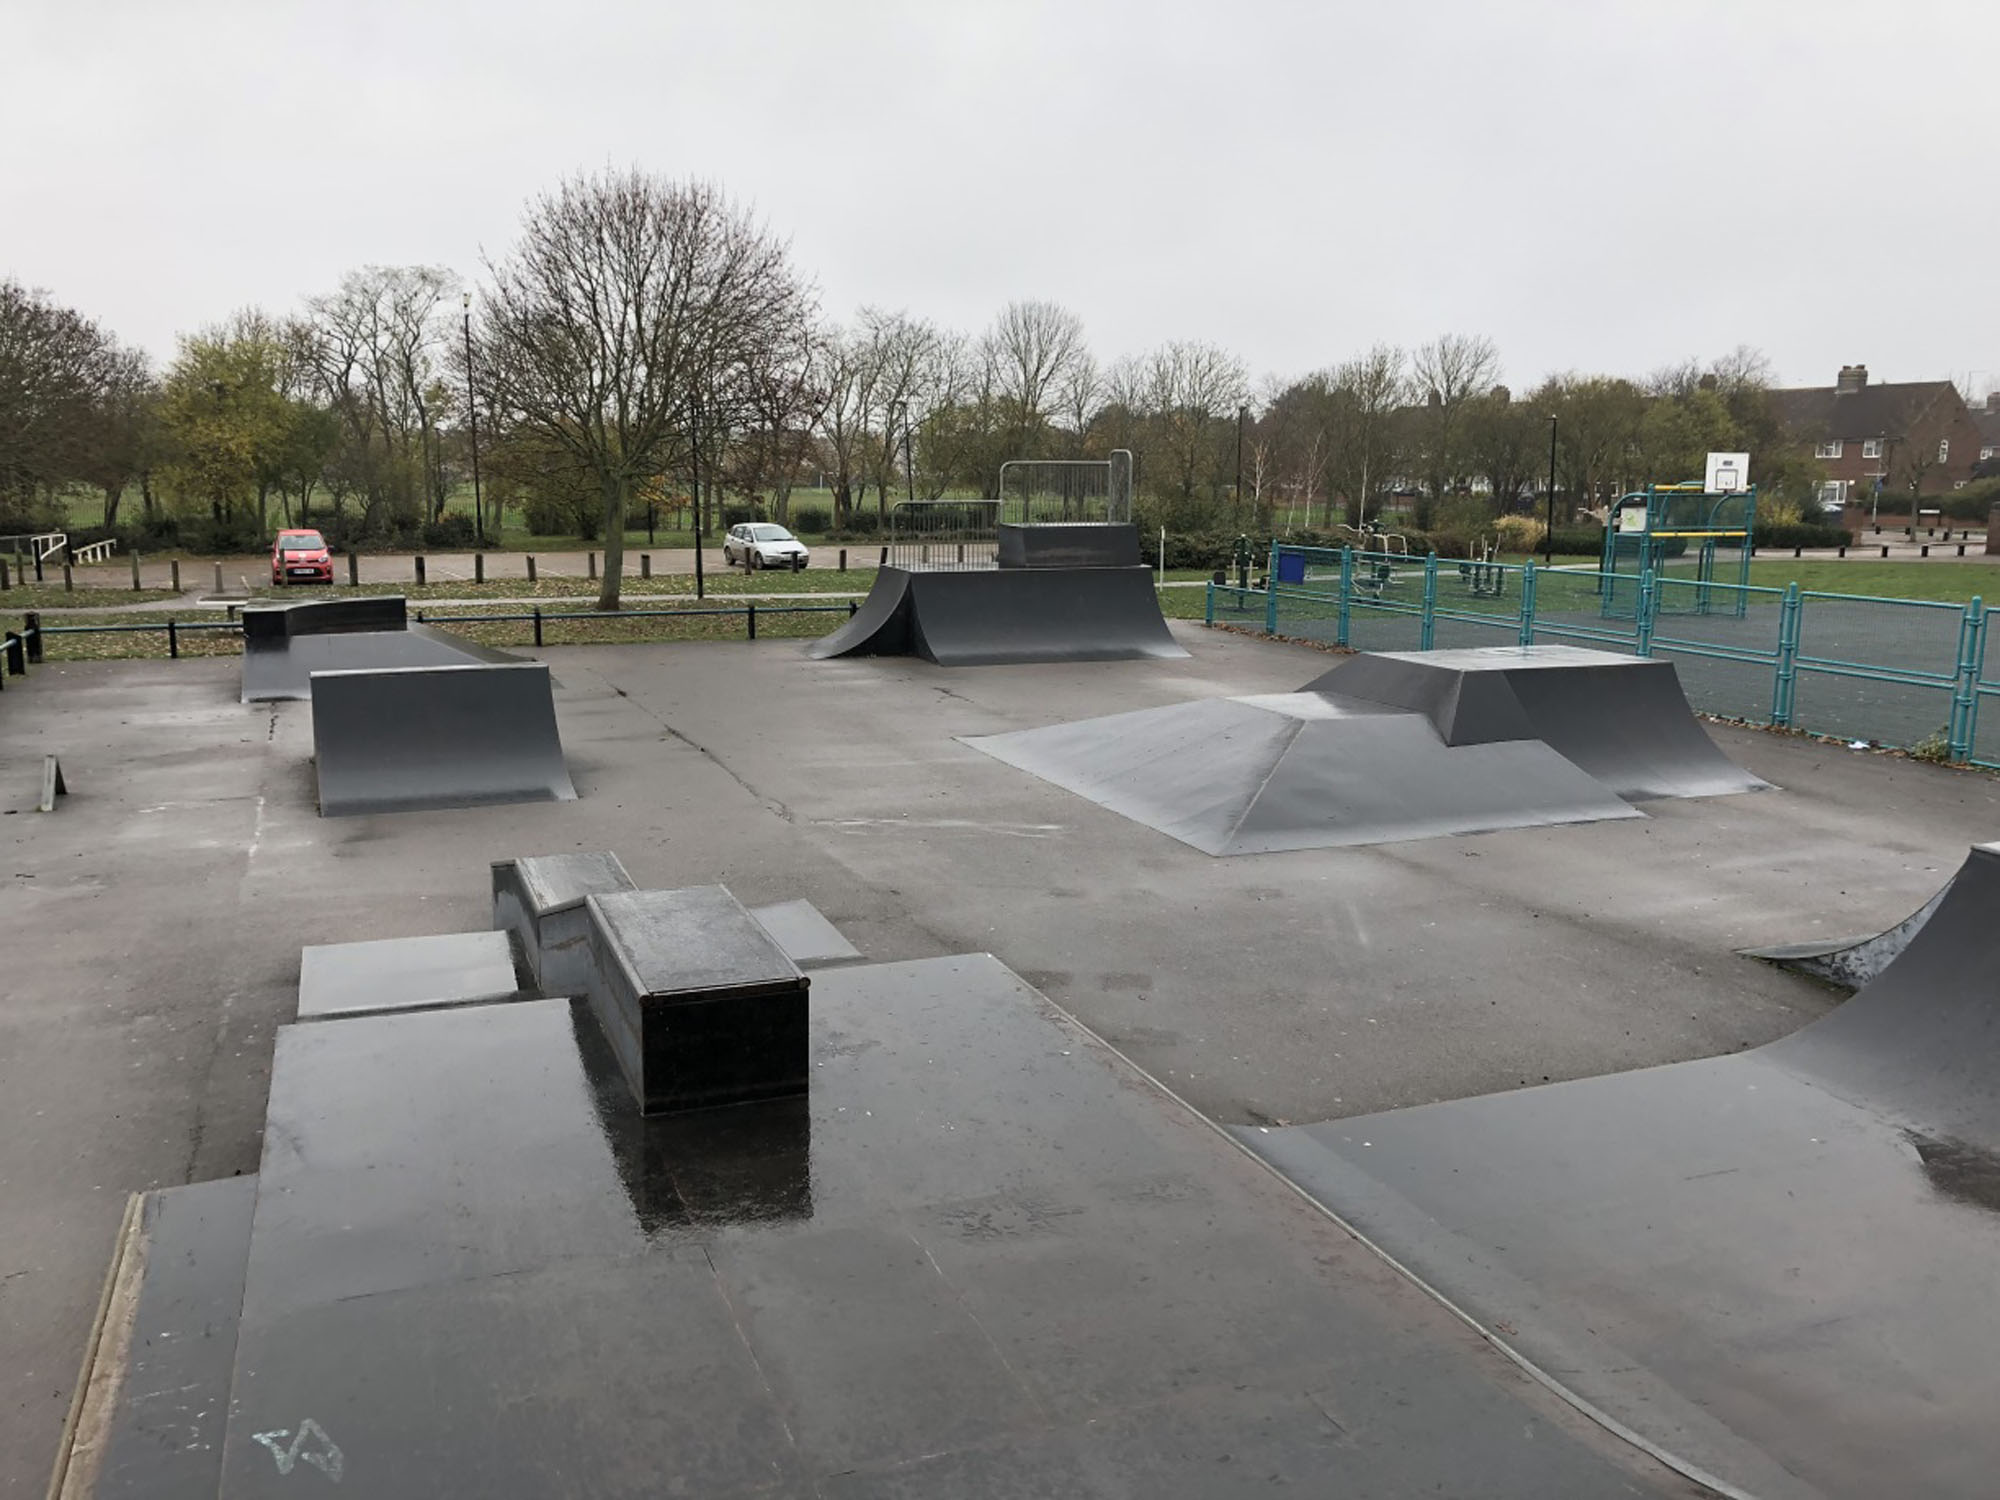 bedford jubilee skatepark review tips skateboarding in bedfordshire u k